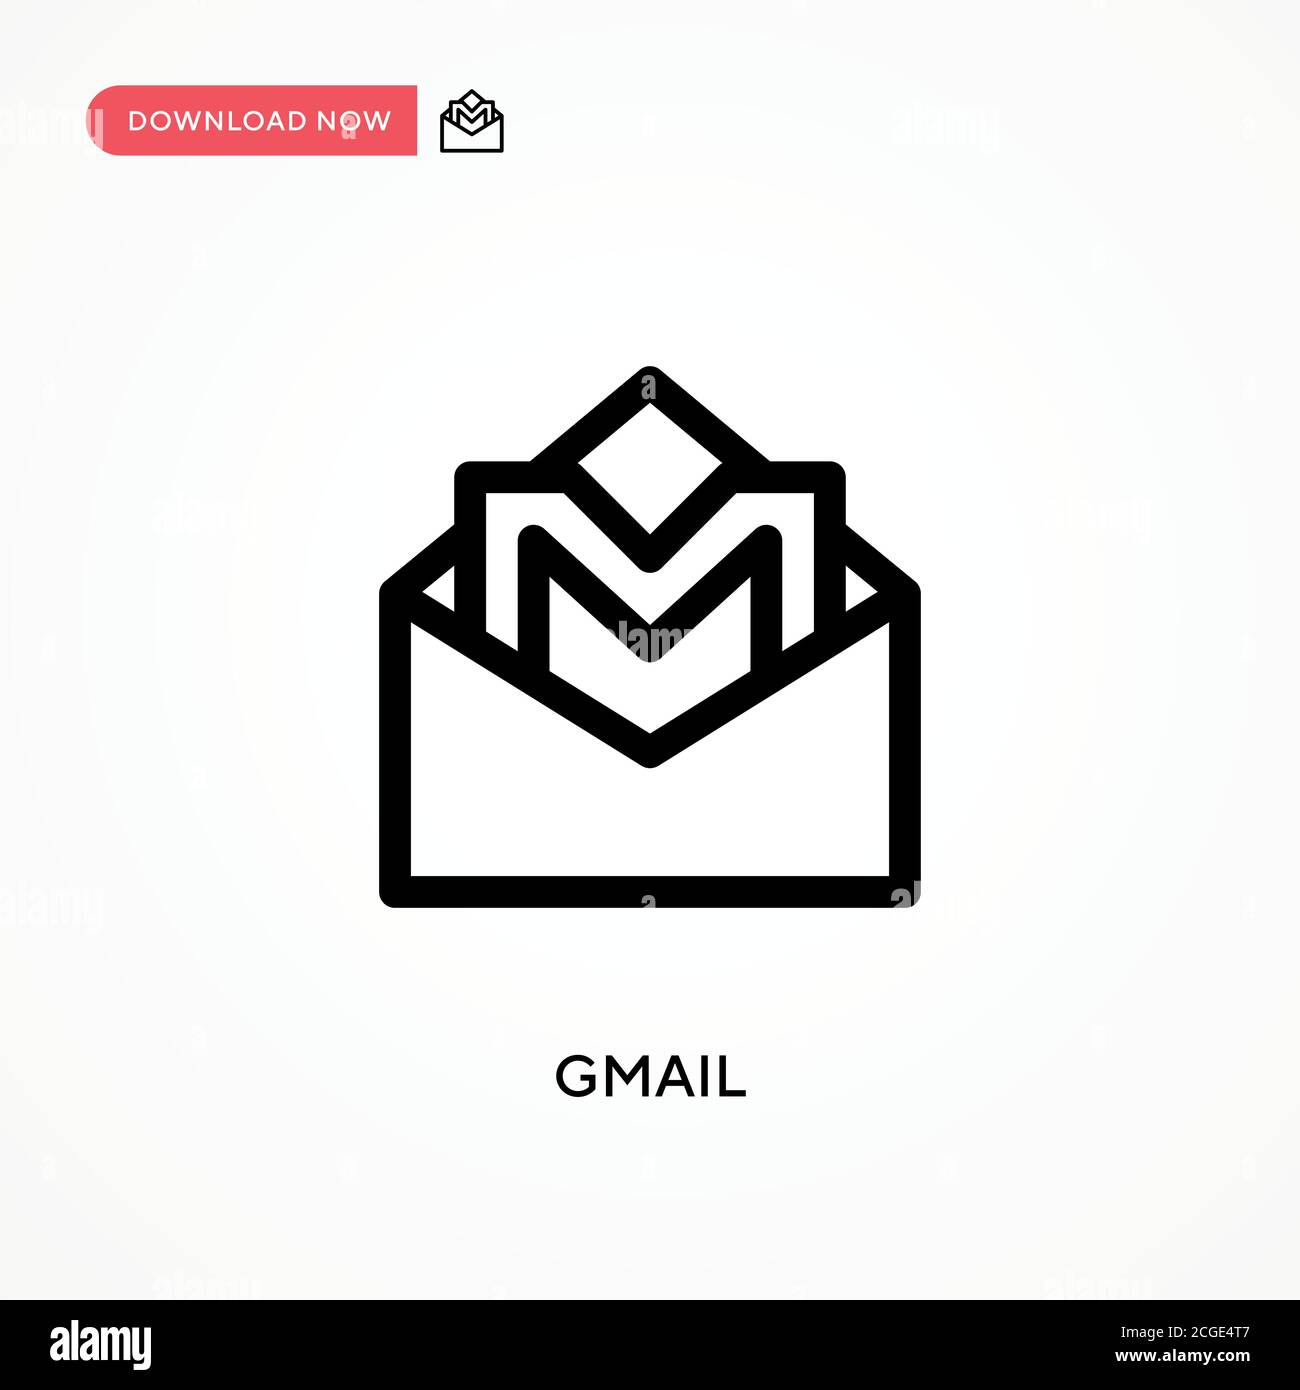 Gmail vector logo (.EPS + .SVG) download for free - Brandlogos.net